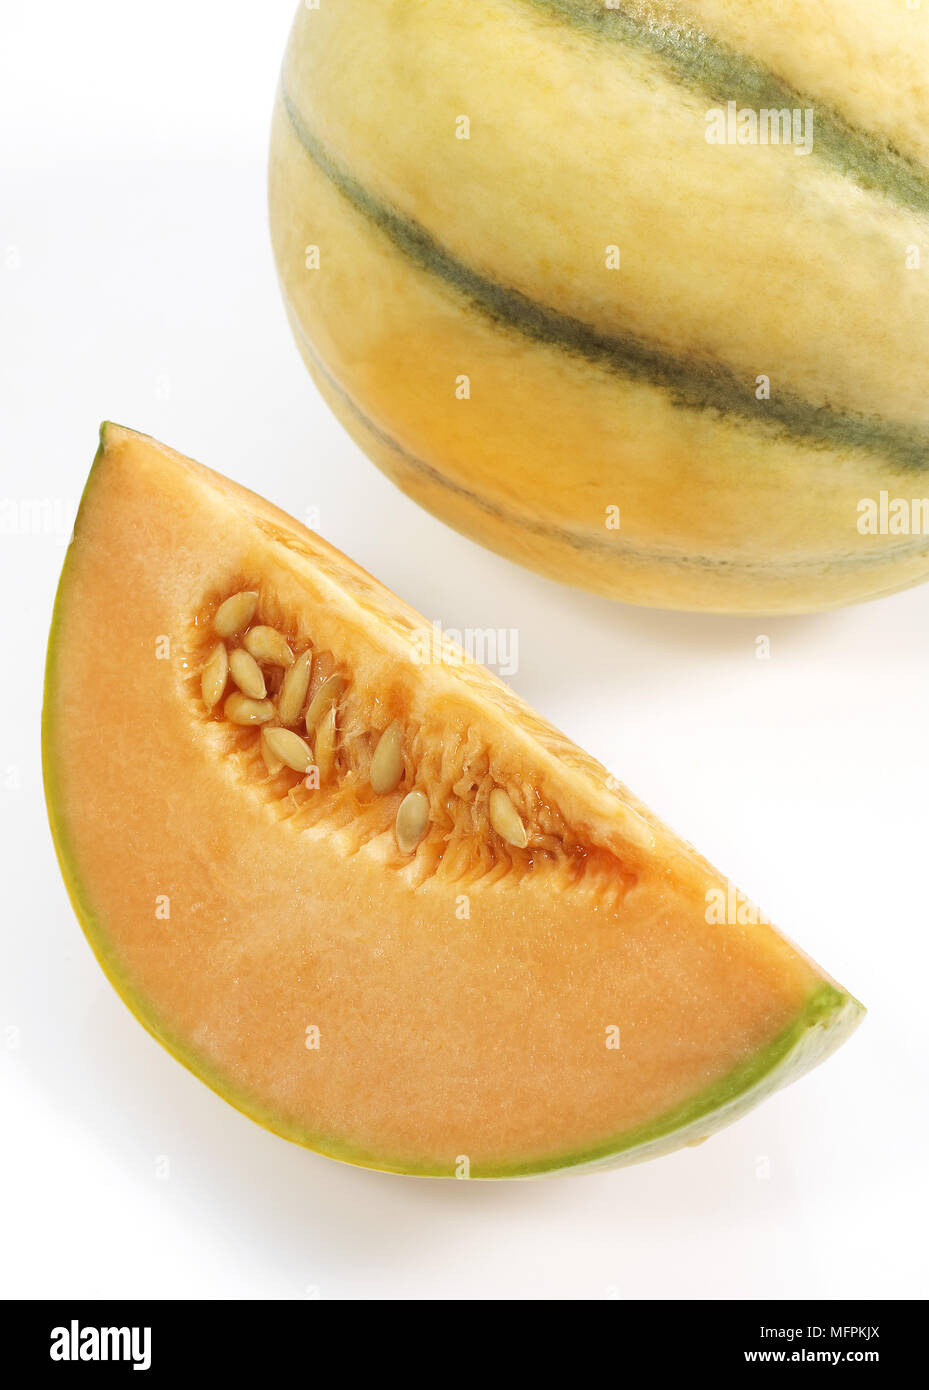 Cavaillon Melon, cucumis melo, Fruits on White Background Stock Photo